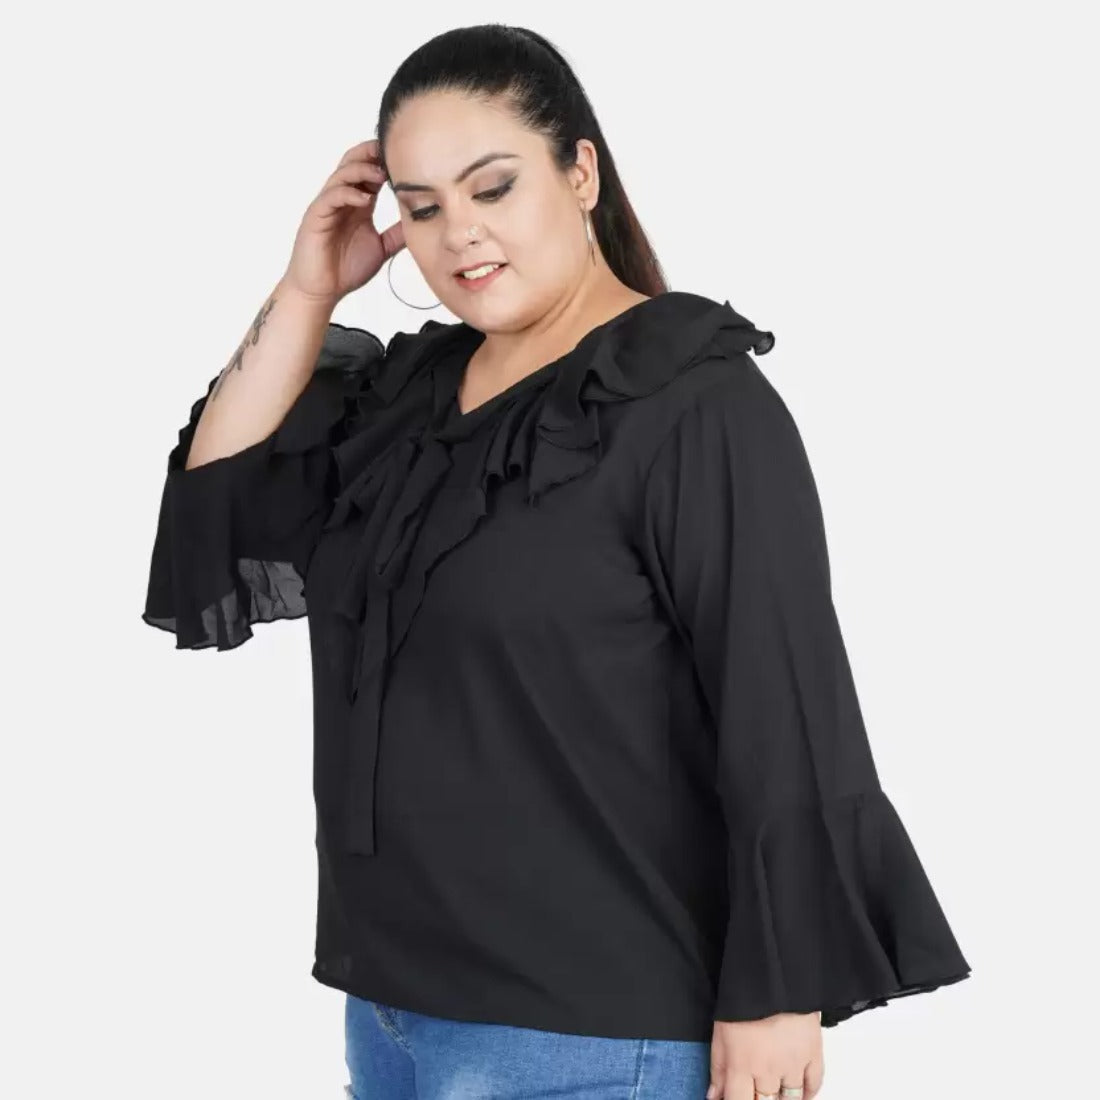 Women's Casual Bell Sleeve Solid Black Top (Color:Black, Material:Georgette) - GillKart